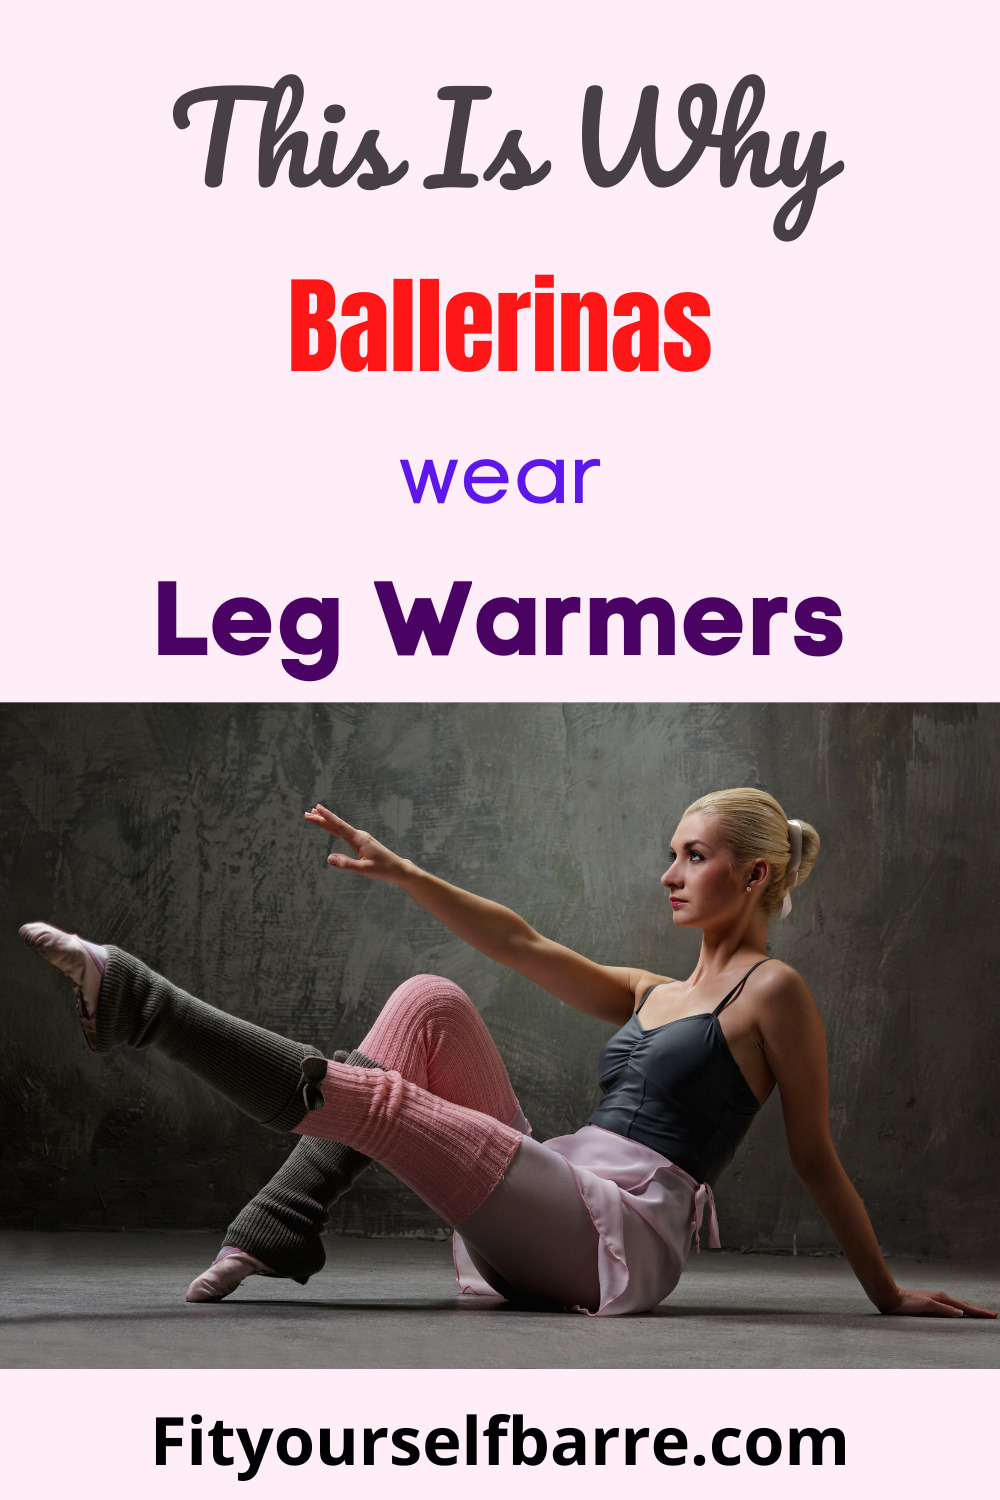 Ballerina-wearing-leg-warmers-and-posing